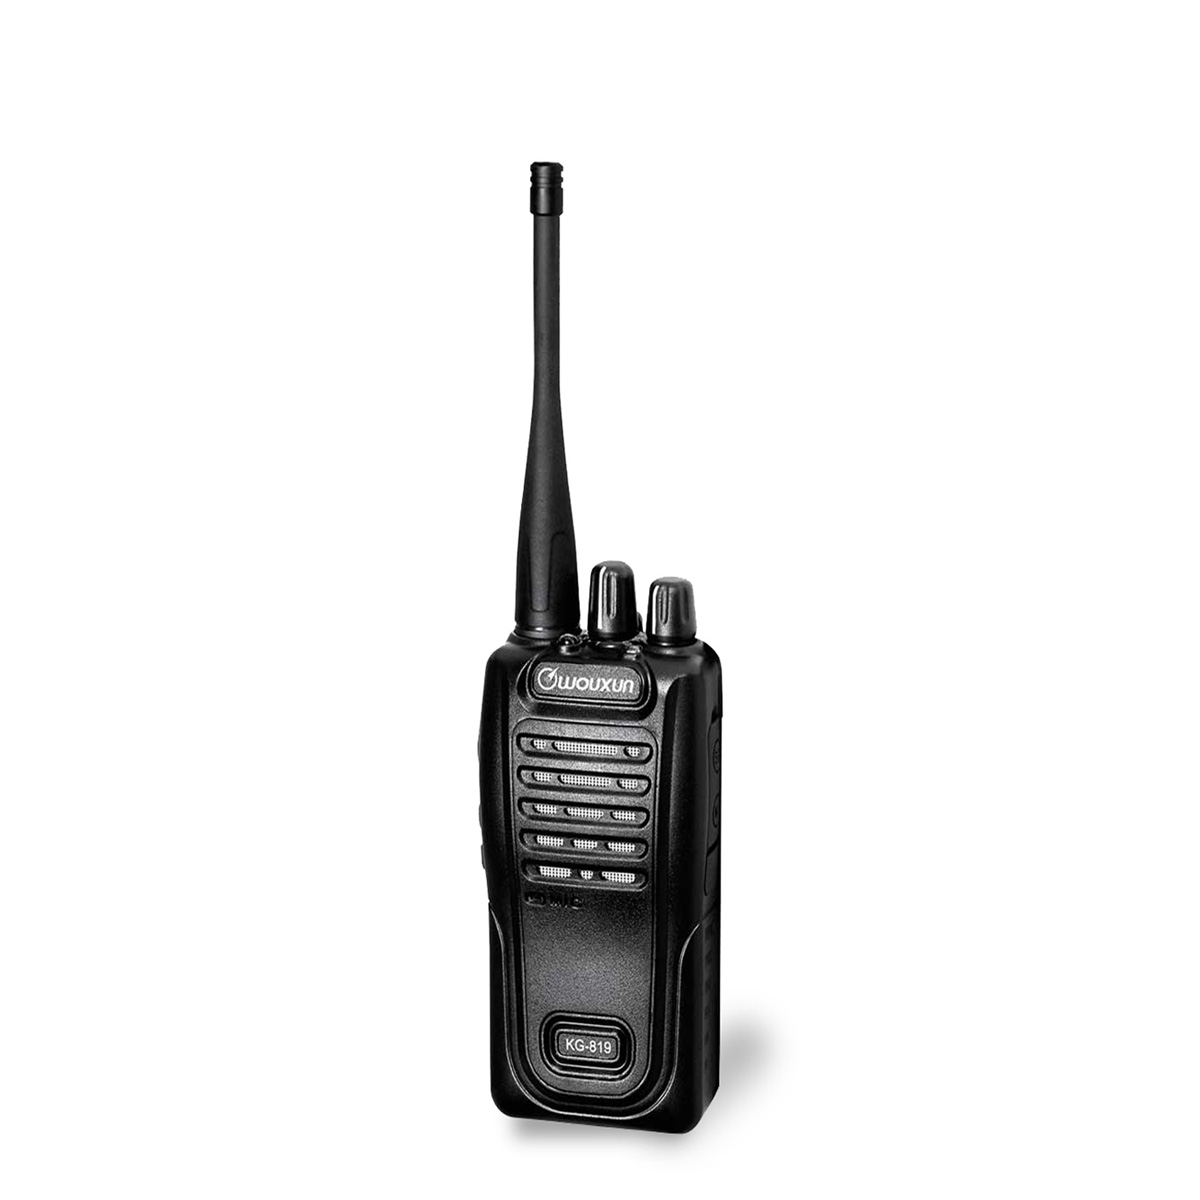 Radio Wouxun KG-819 Analógico UHF 420-520 MHz